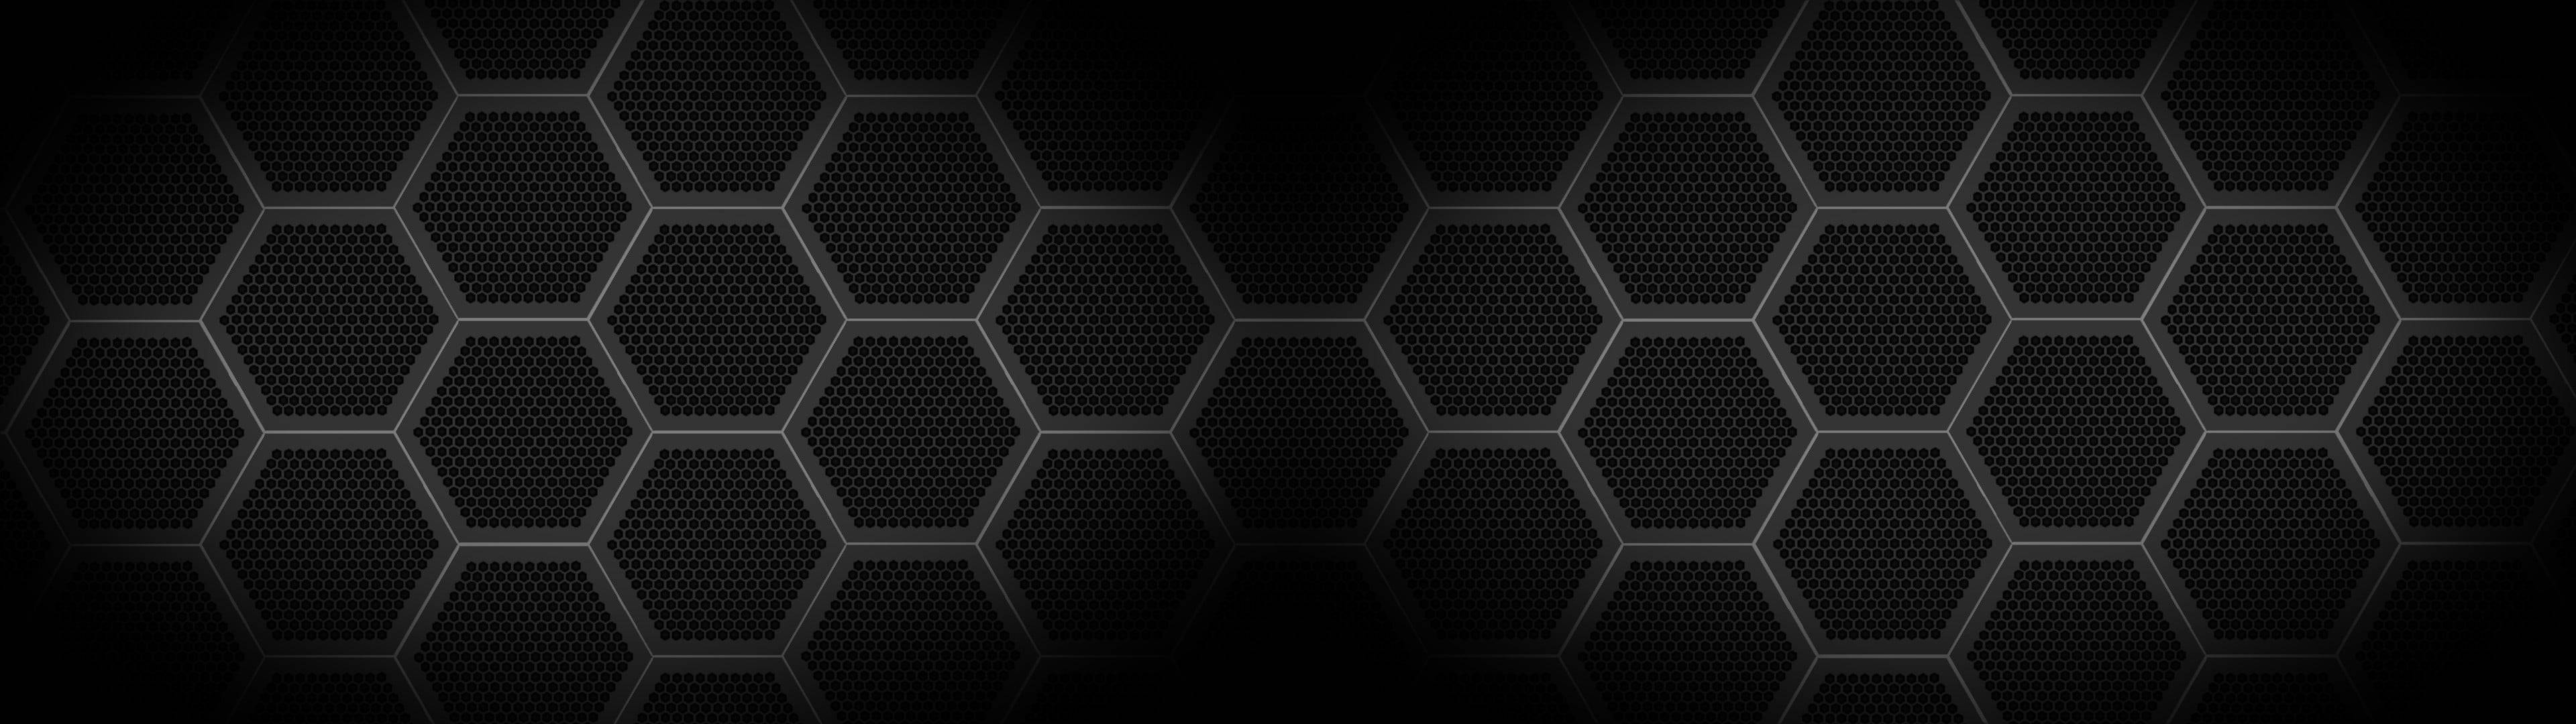 Honeycomb 4k Ultra Hd Dark Wallpaper